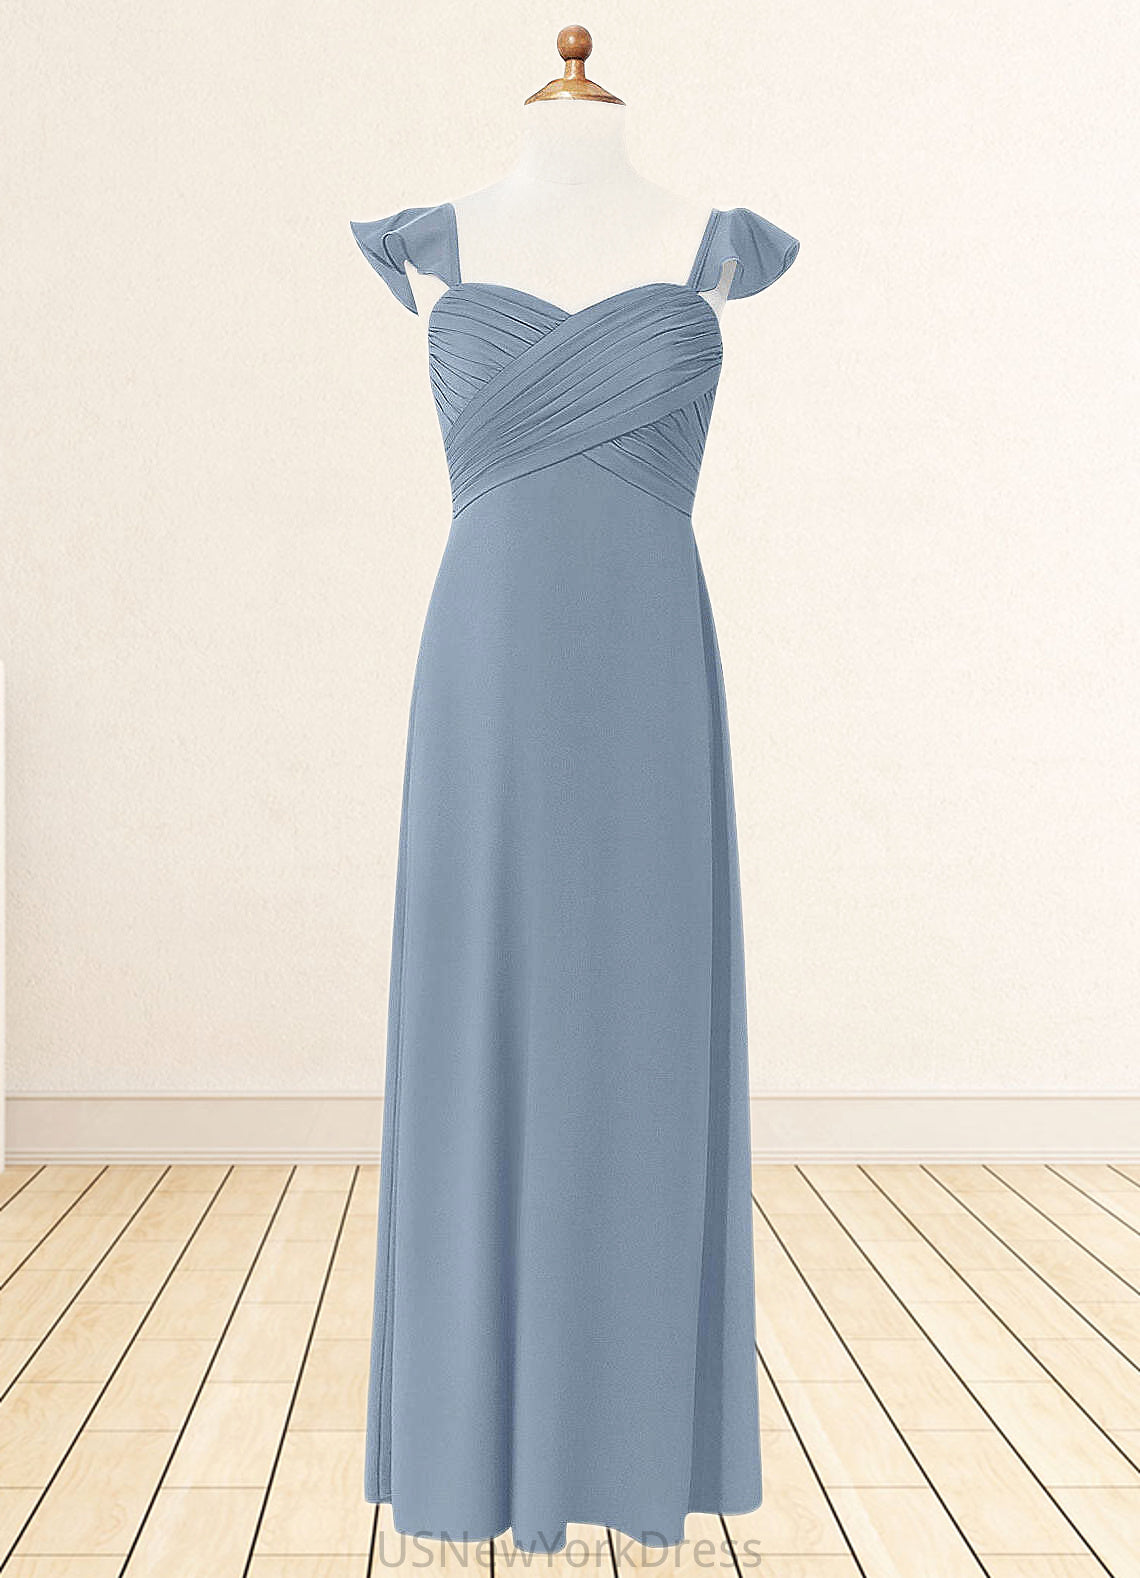 Jordin A-Line Sweetheart Neckline Chiffon Floor-Length Junior Bridesmaid Dress dusty blue DJP0022869